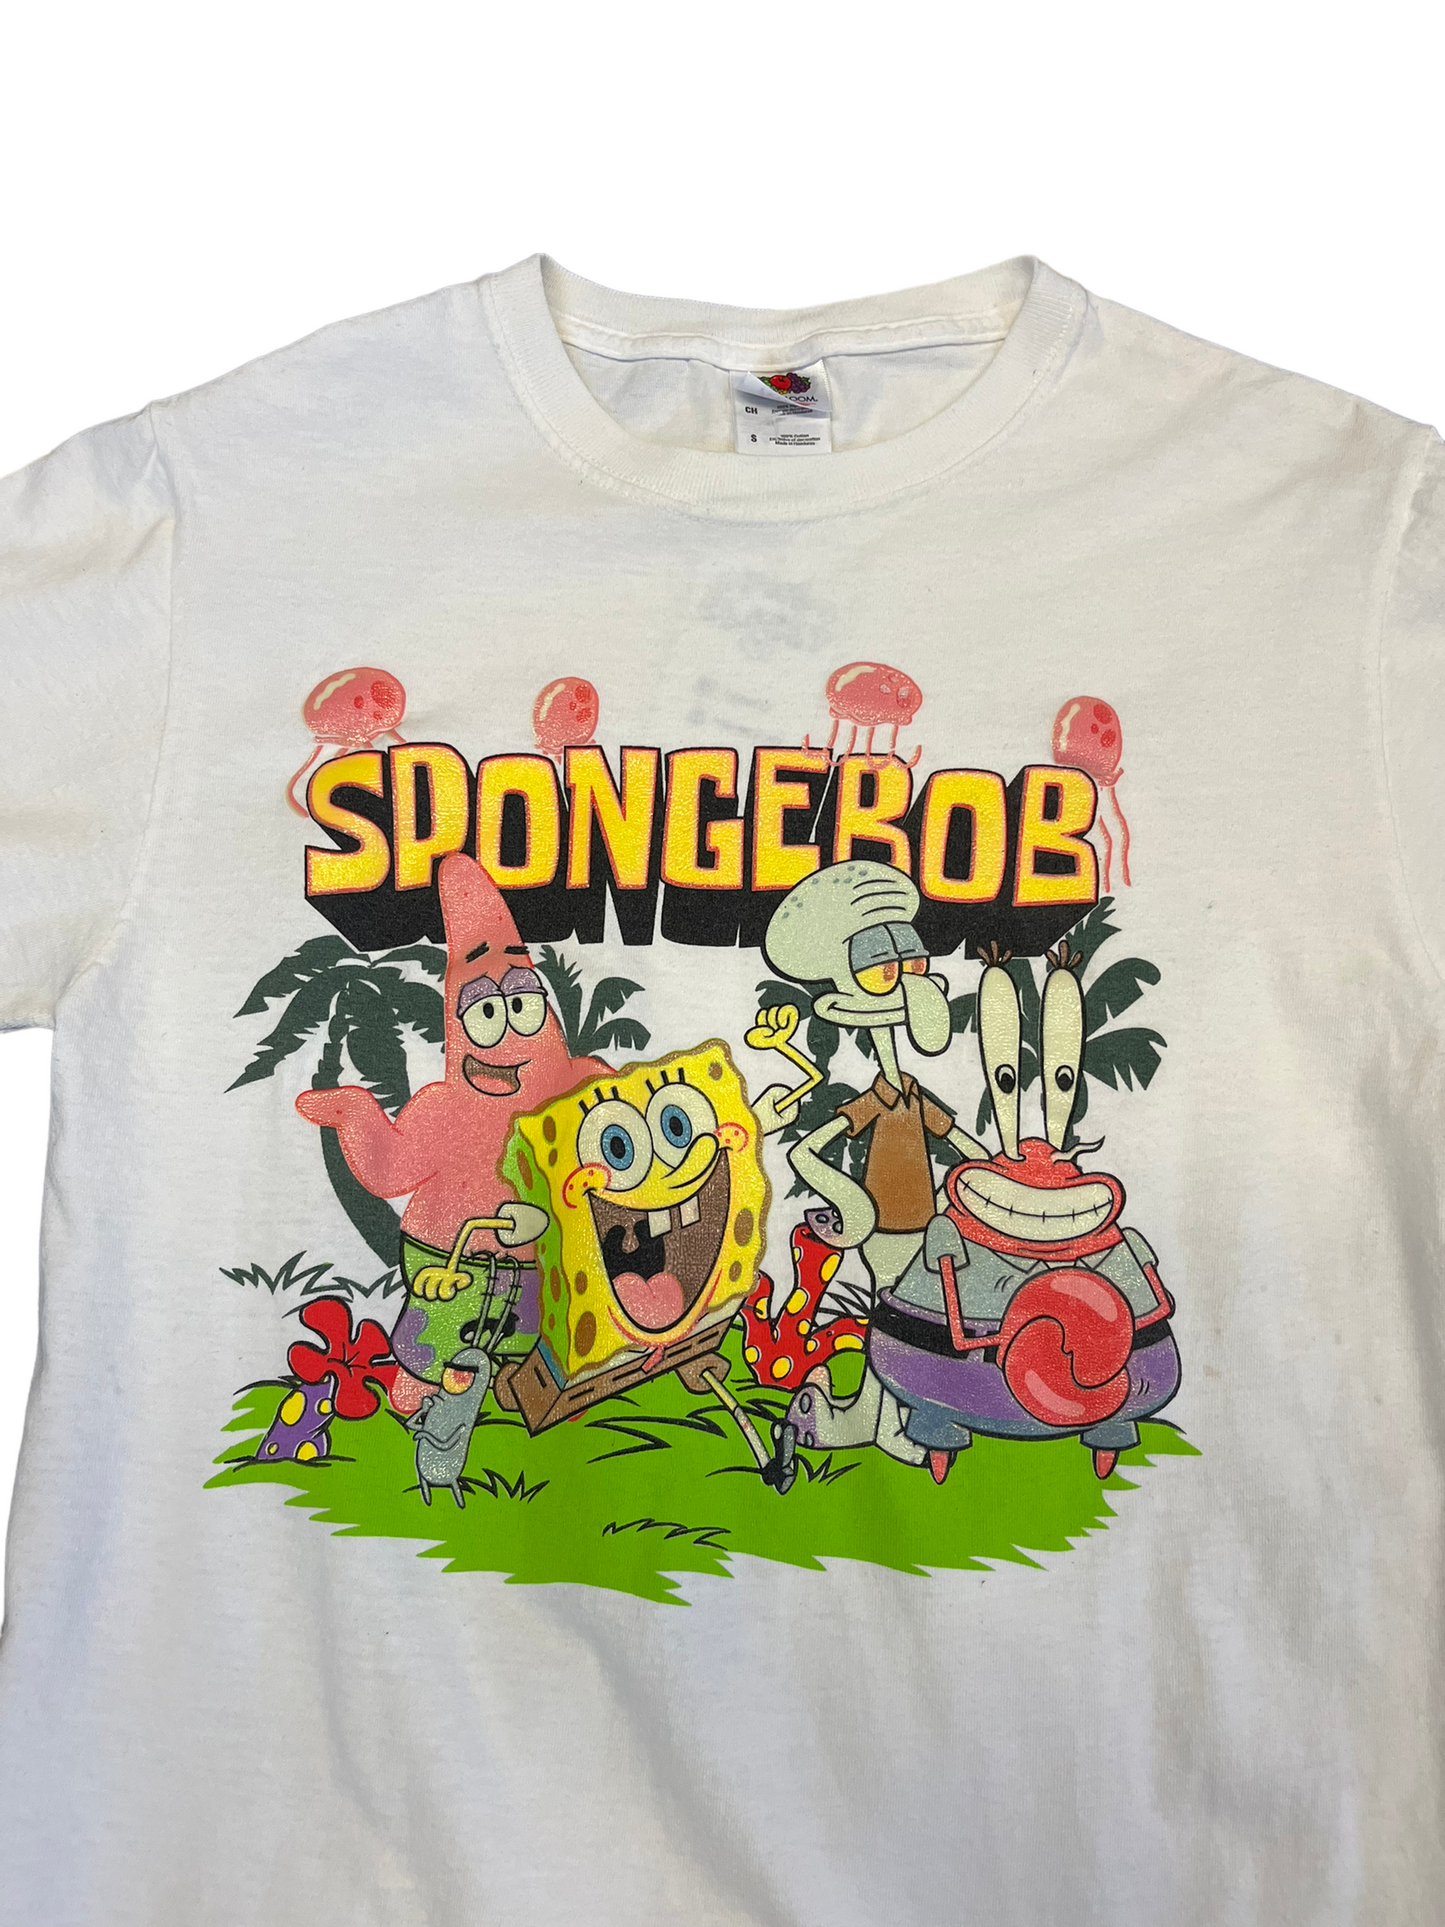 (S) 2003 SpongeBob SquarePants Tee